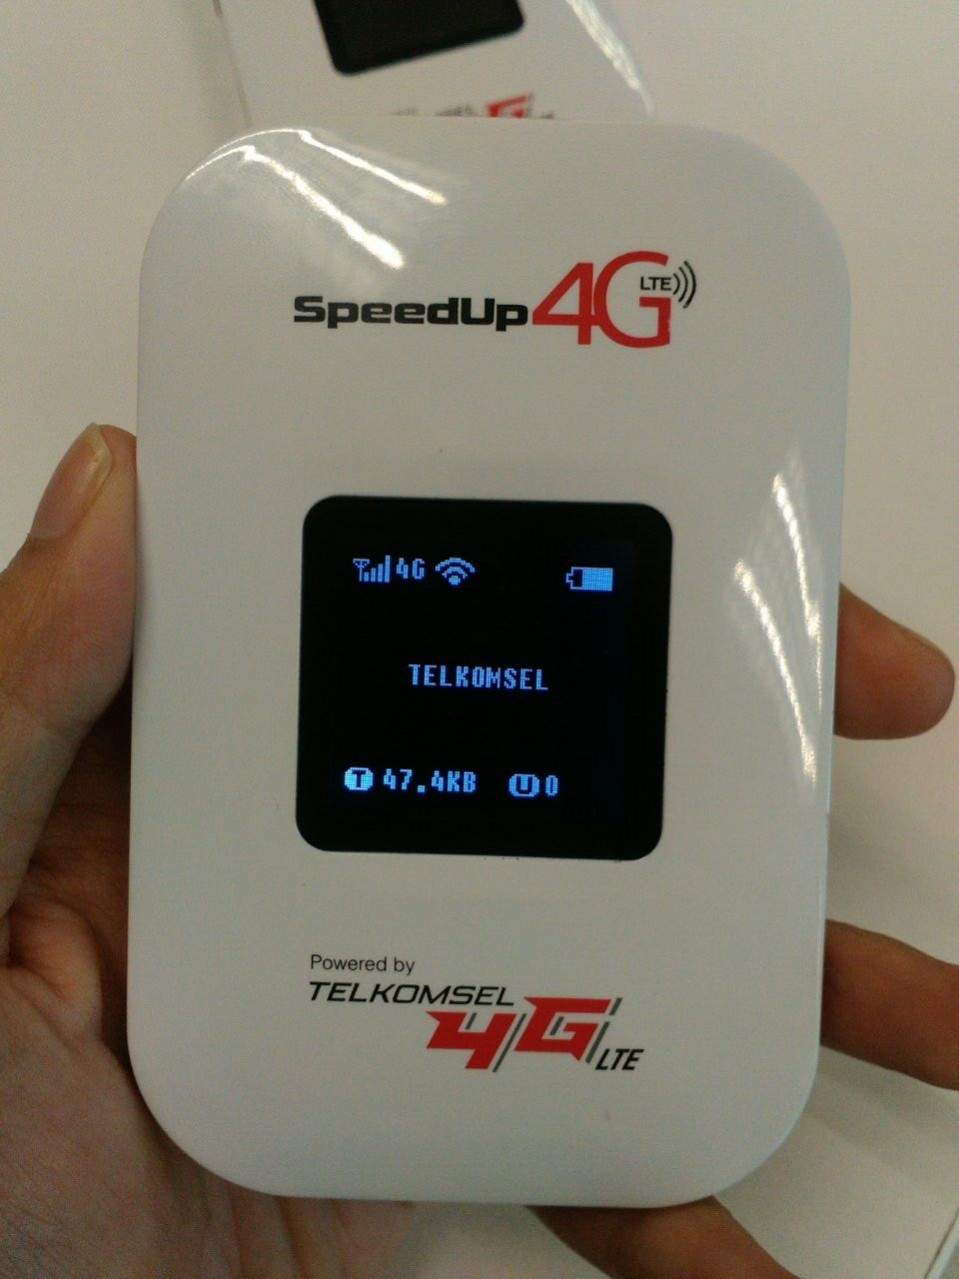 SpeedUp Mifi 4G LTE